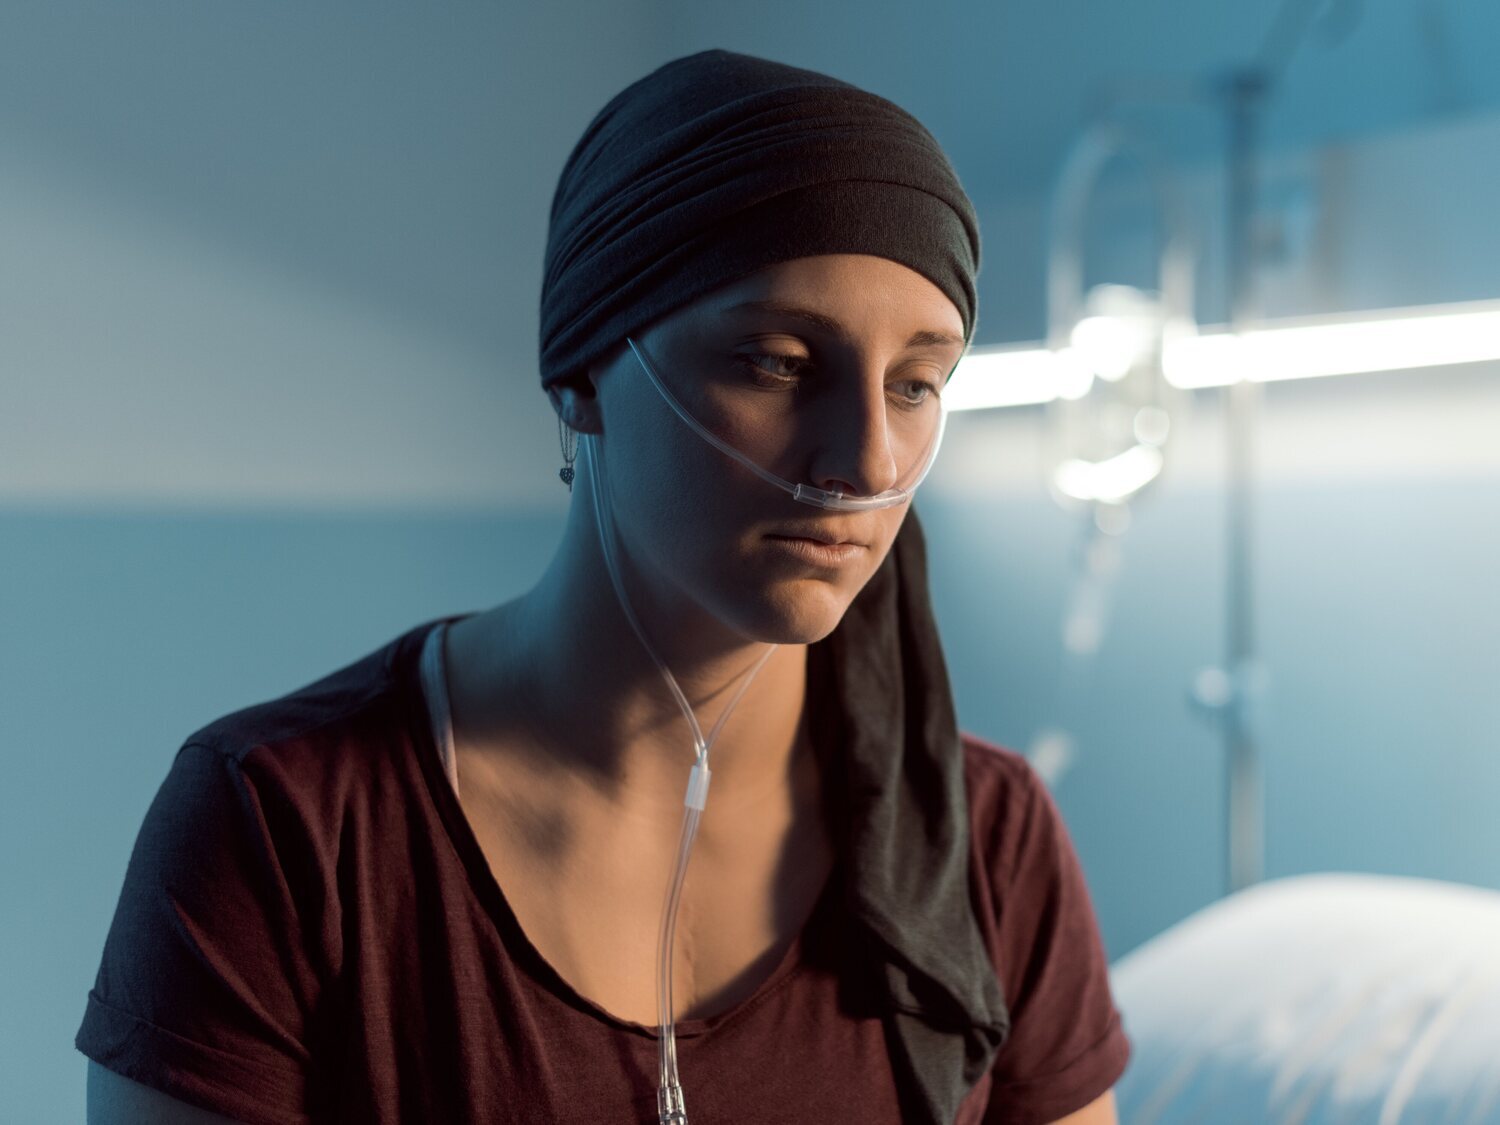 Amenaza de "epidemia de cáncer" en Europa si no se invierte más en investigación